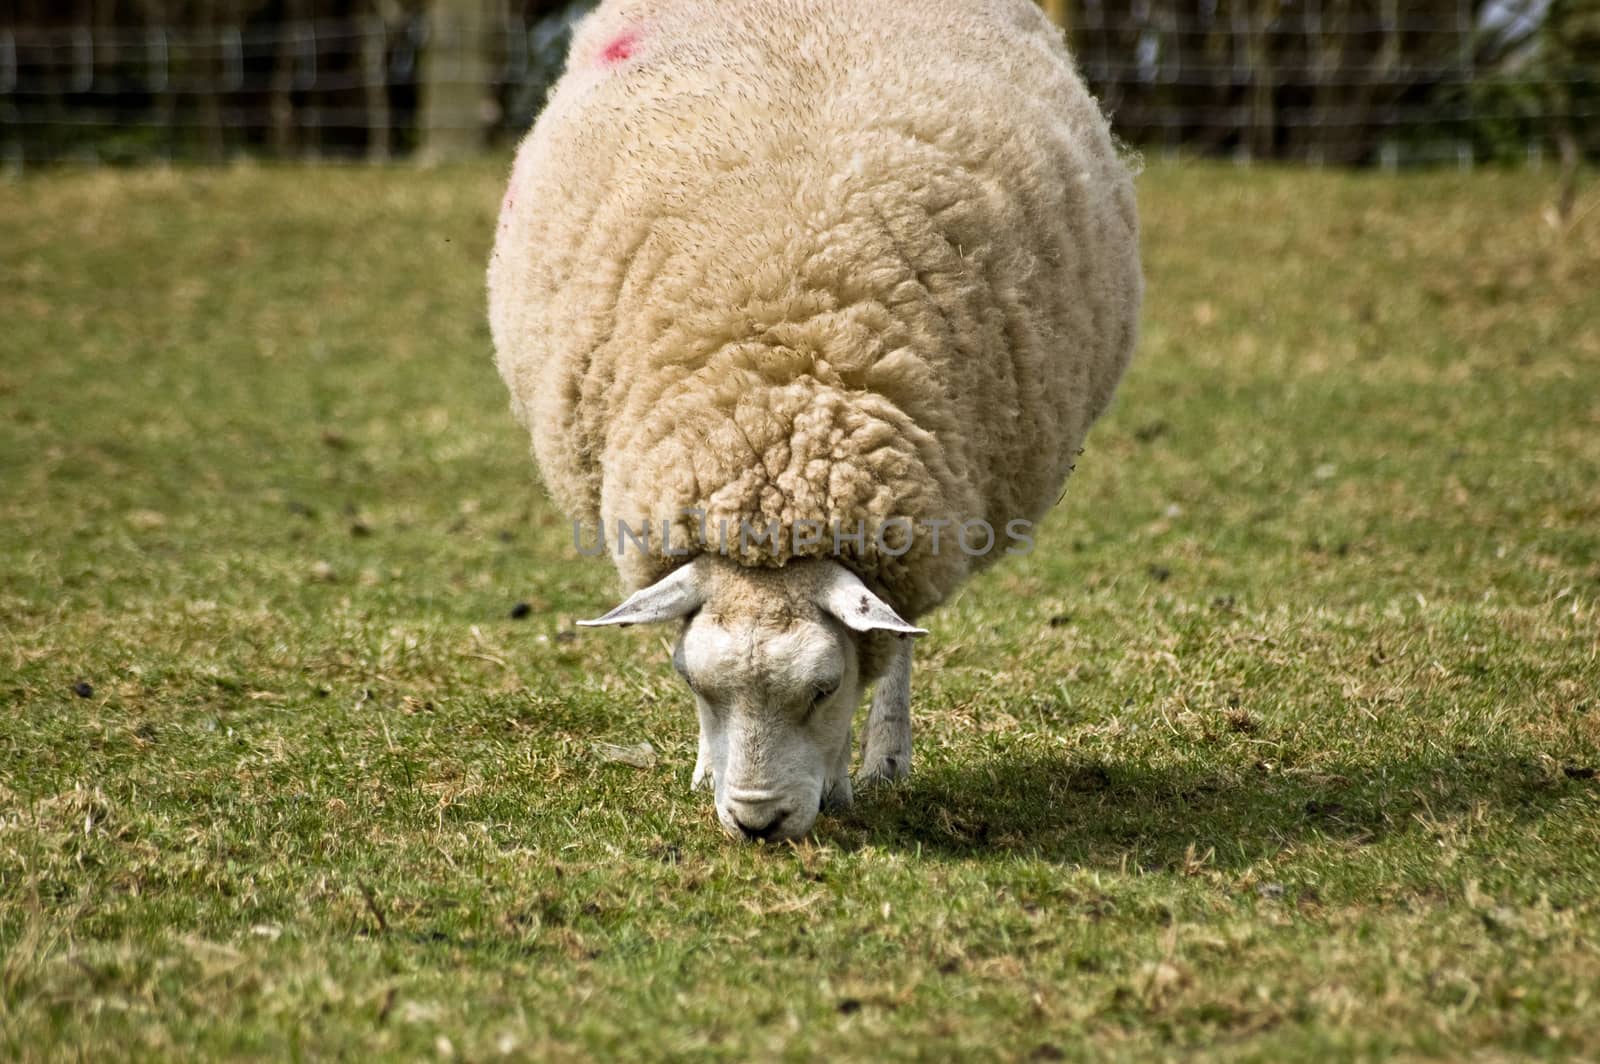 Sheep grazing by BasPhoto